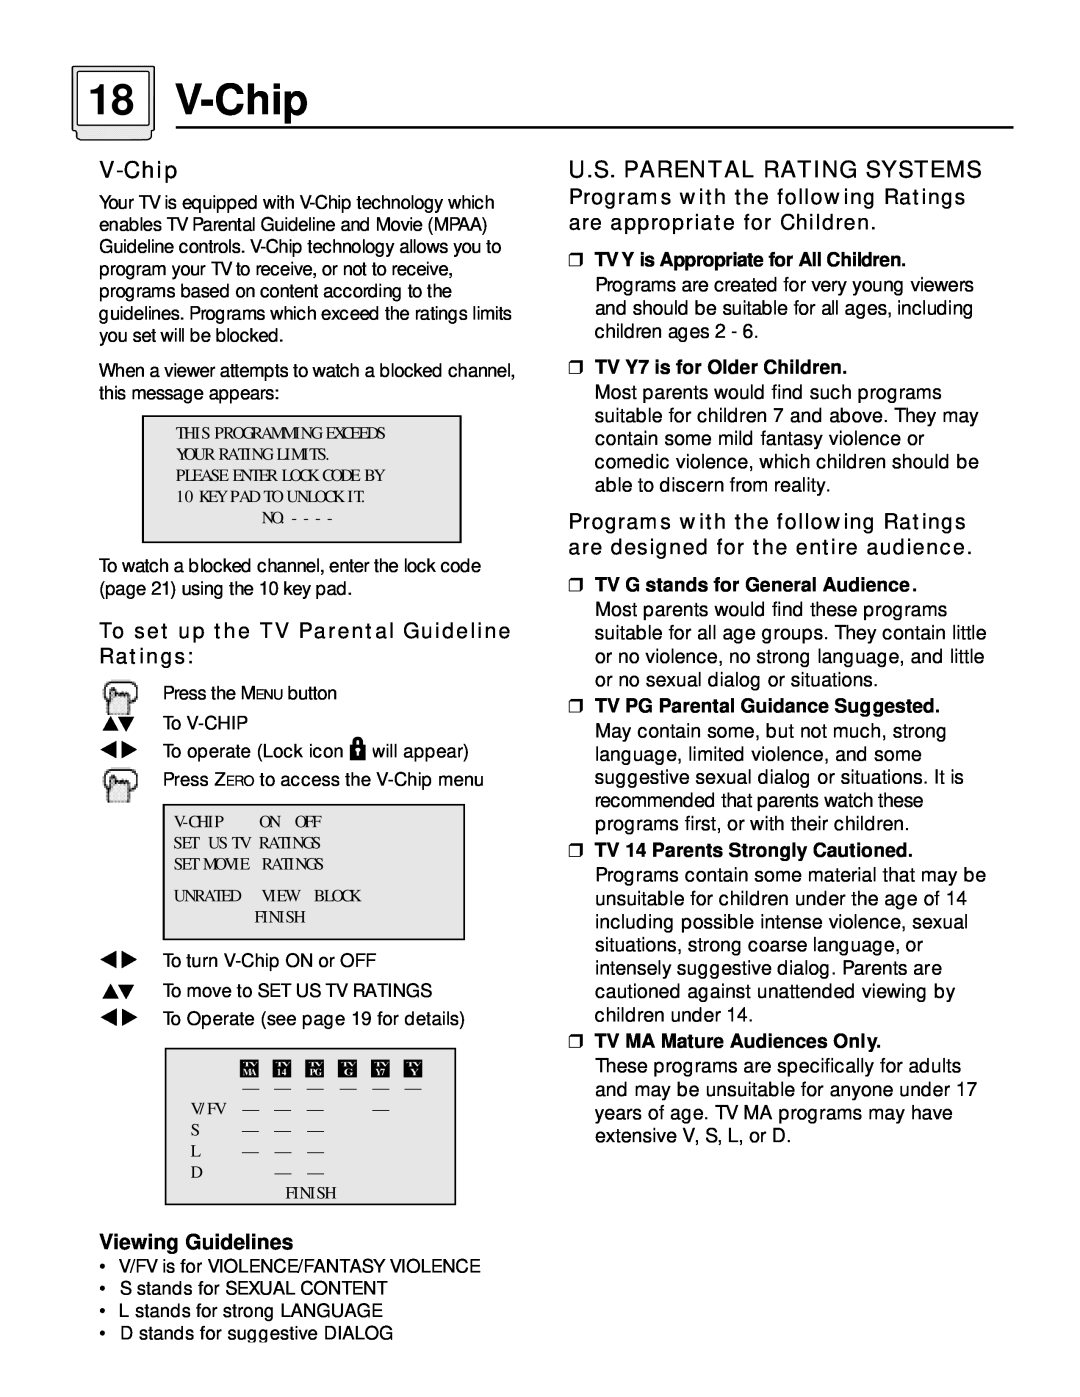 JVC AV 36120 manual V-Chip, U.S. Parental Rating Systems, To set up the TV Parental Guideline Ratings, Viewing Guidelines 